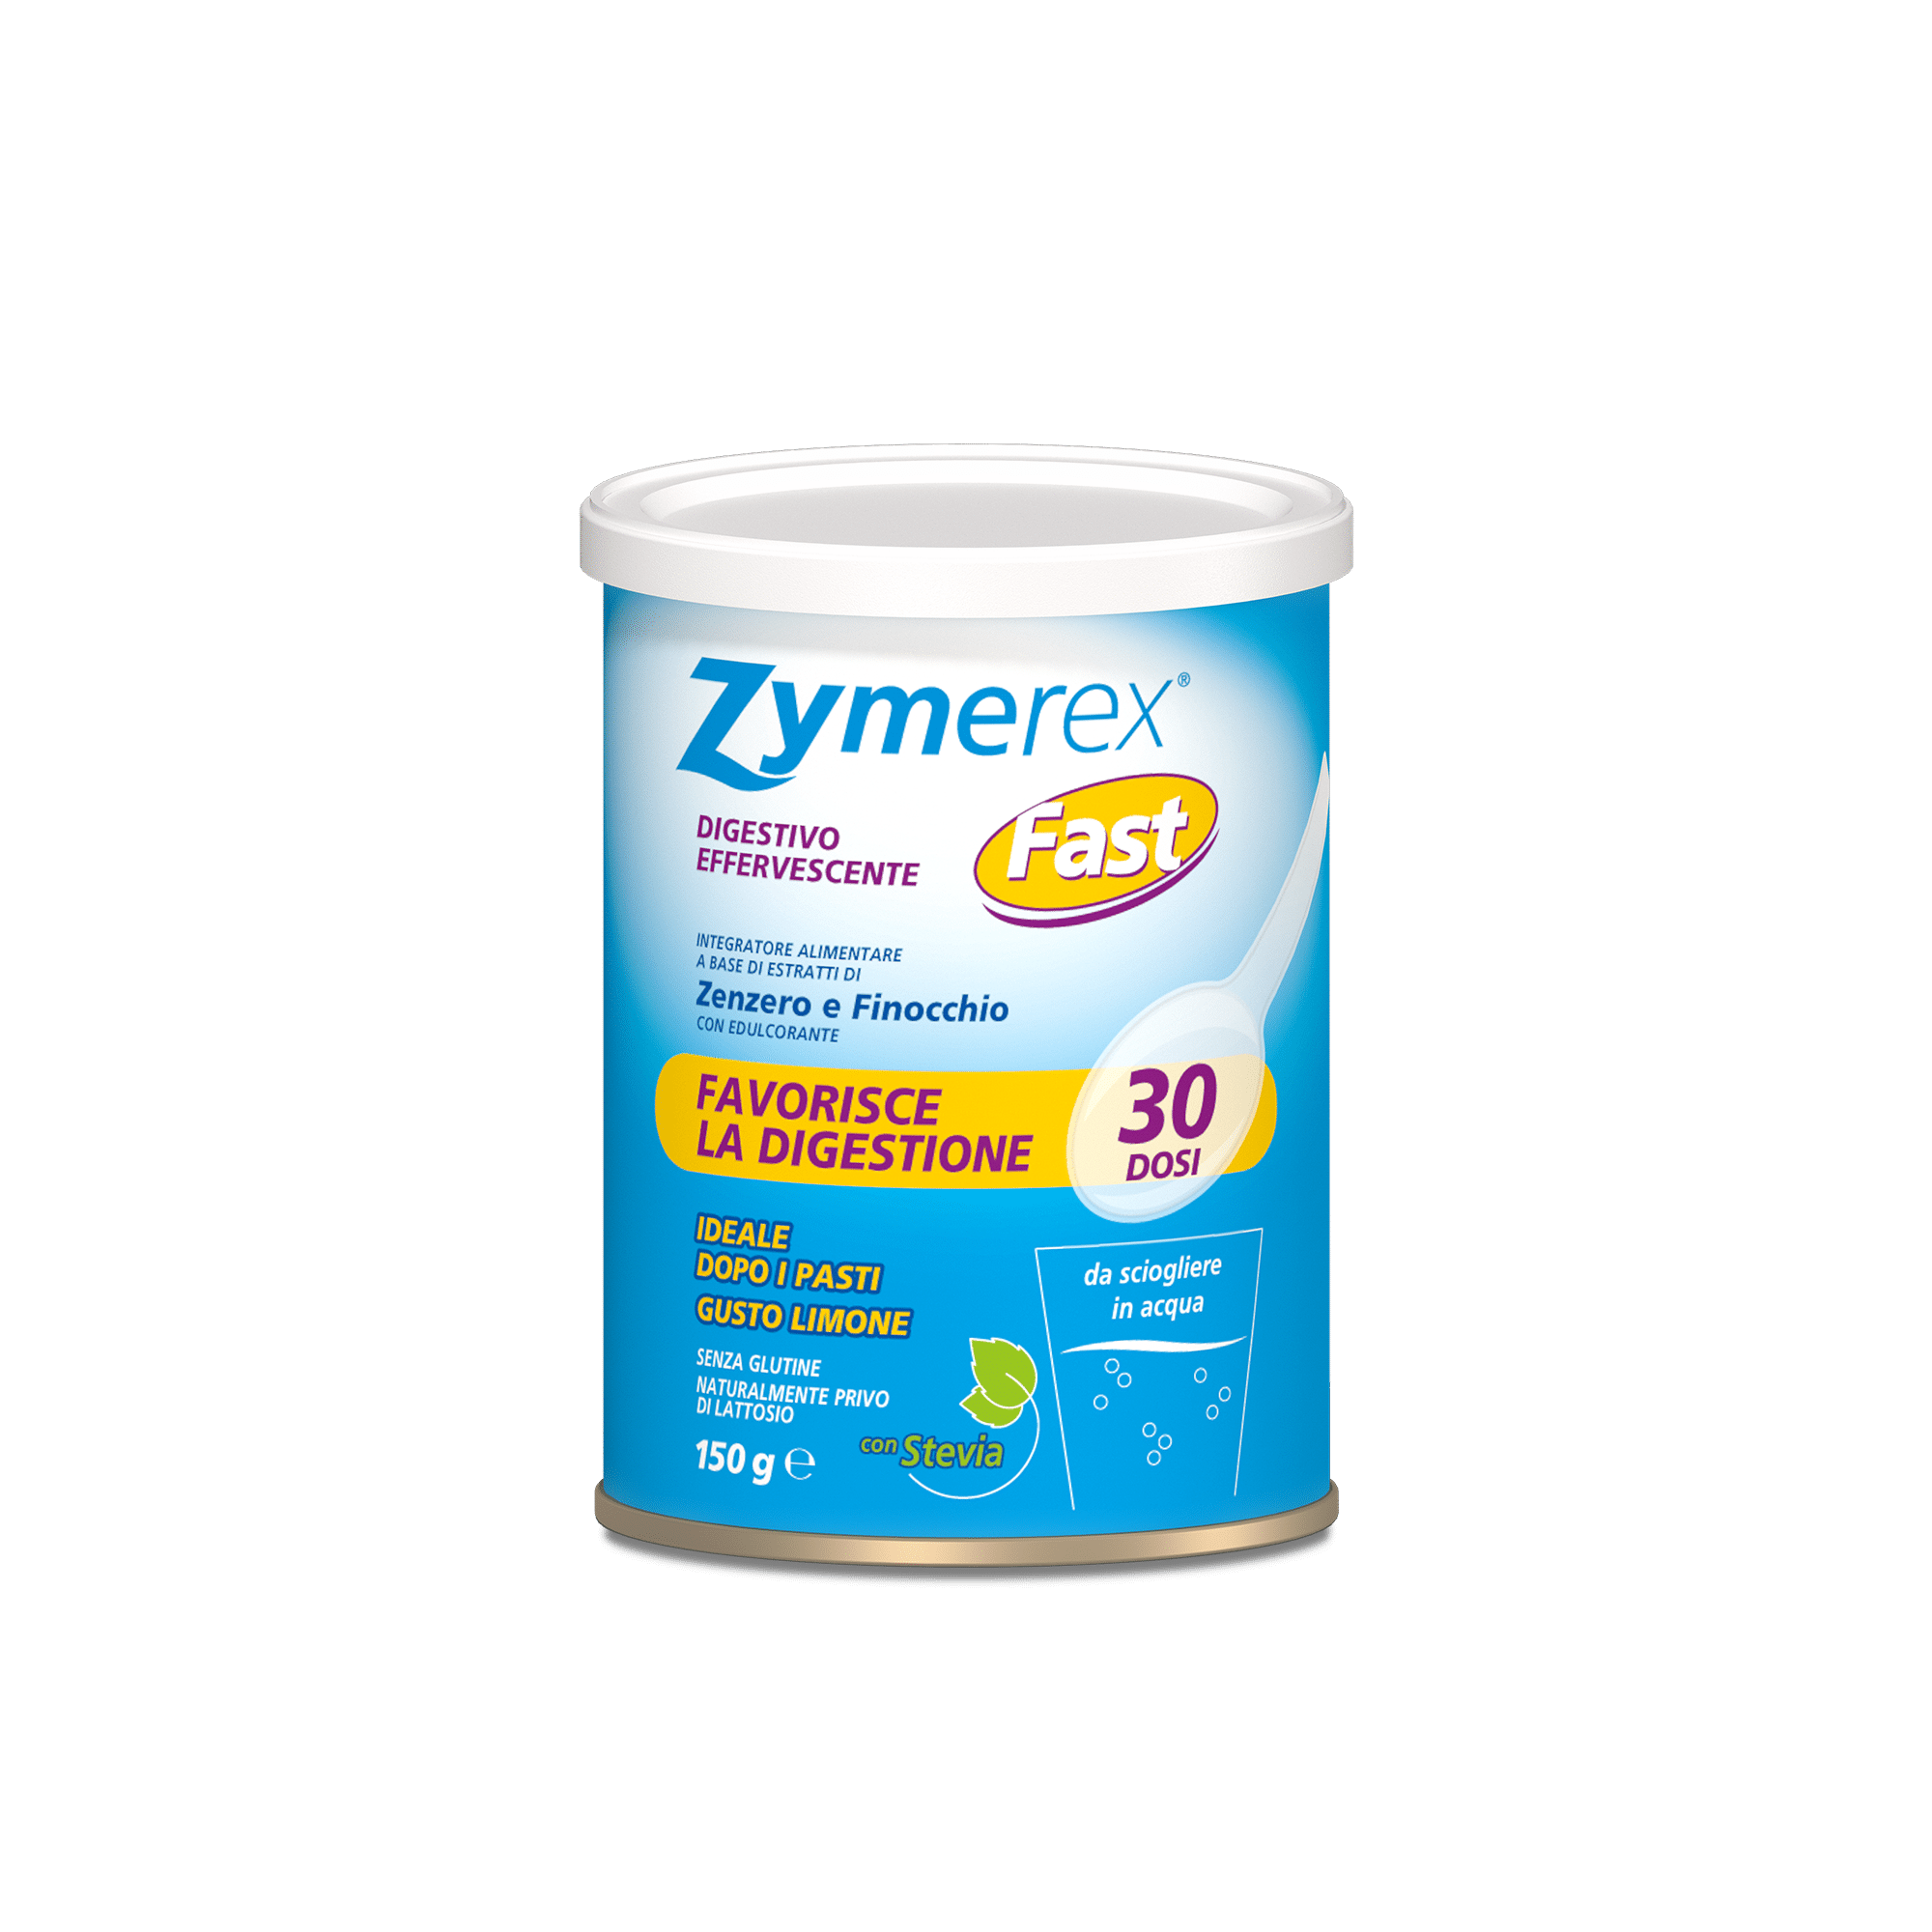 zymerex fast digestivo effervescente confezione